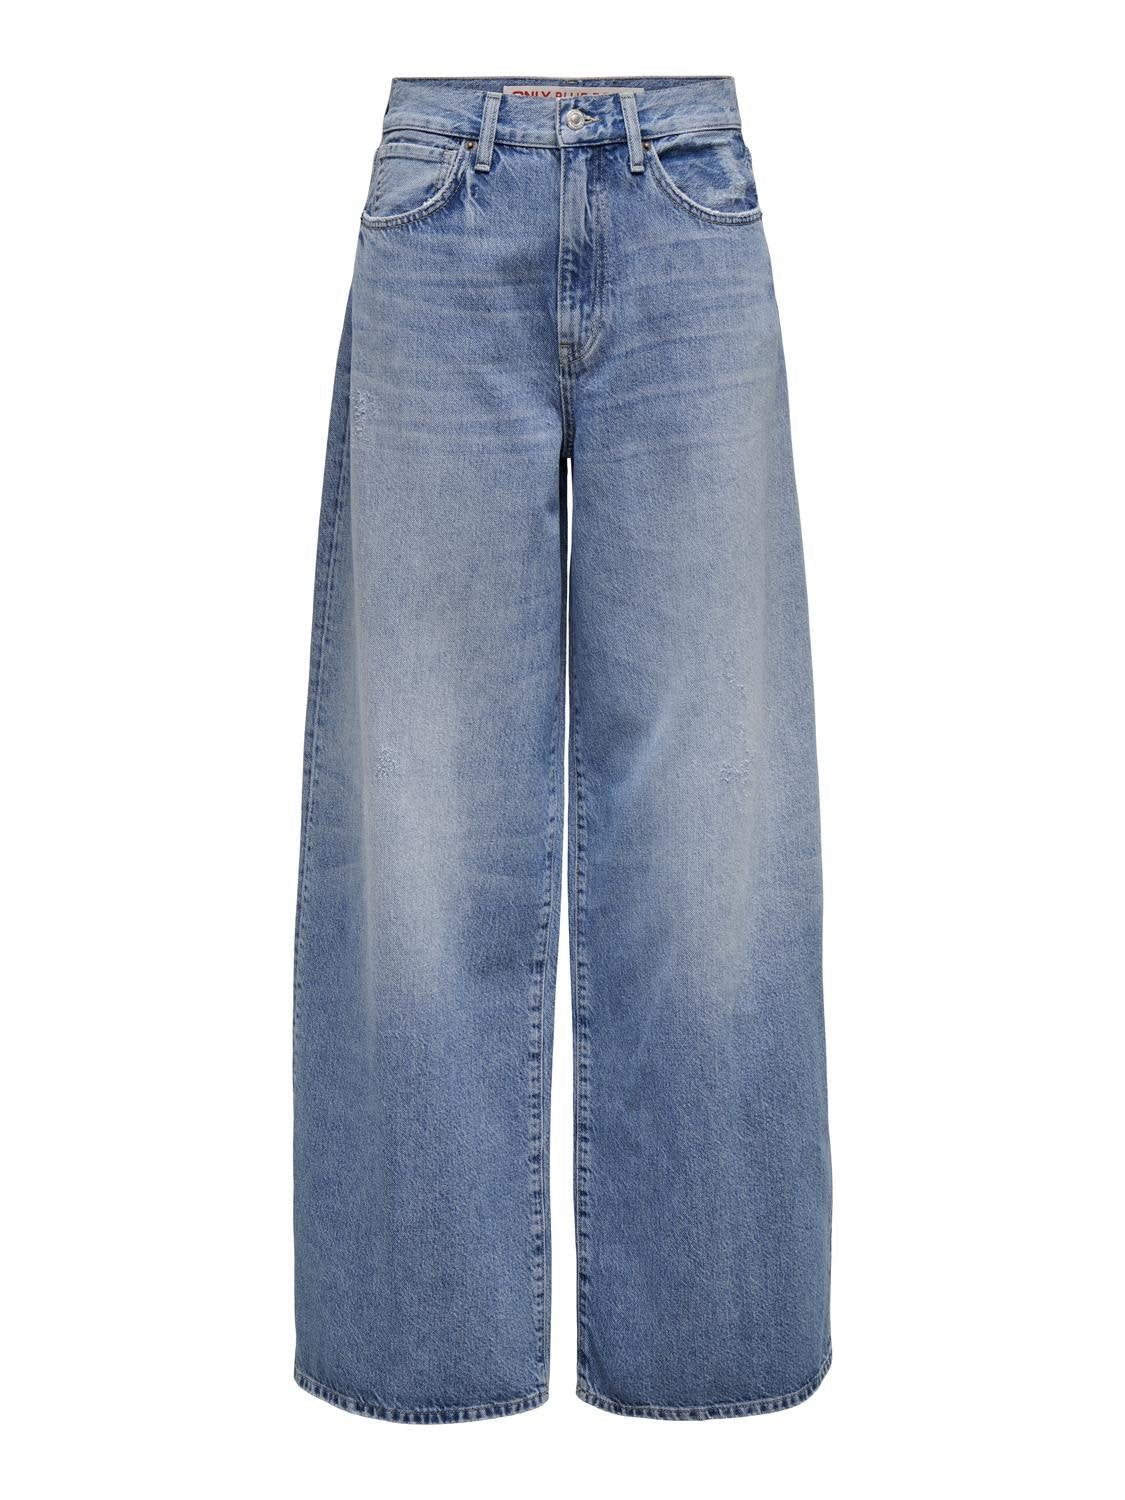 ONLSONIC Jeans - Medium Blue Denim